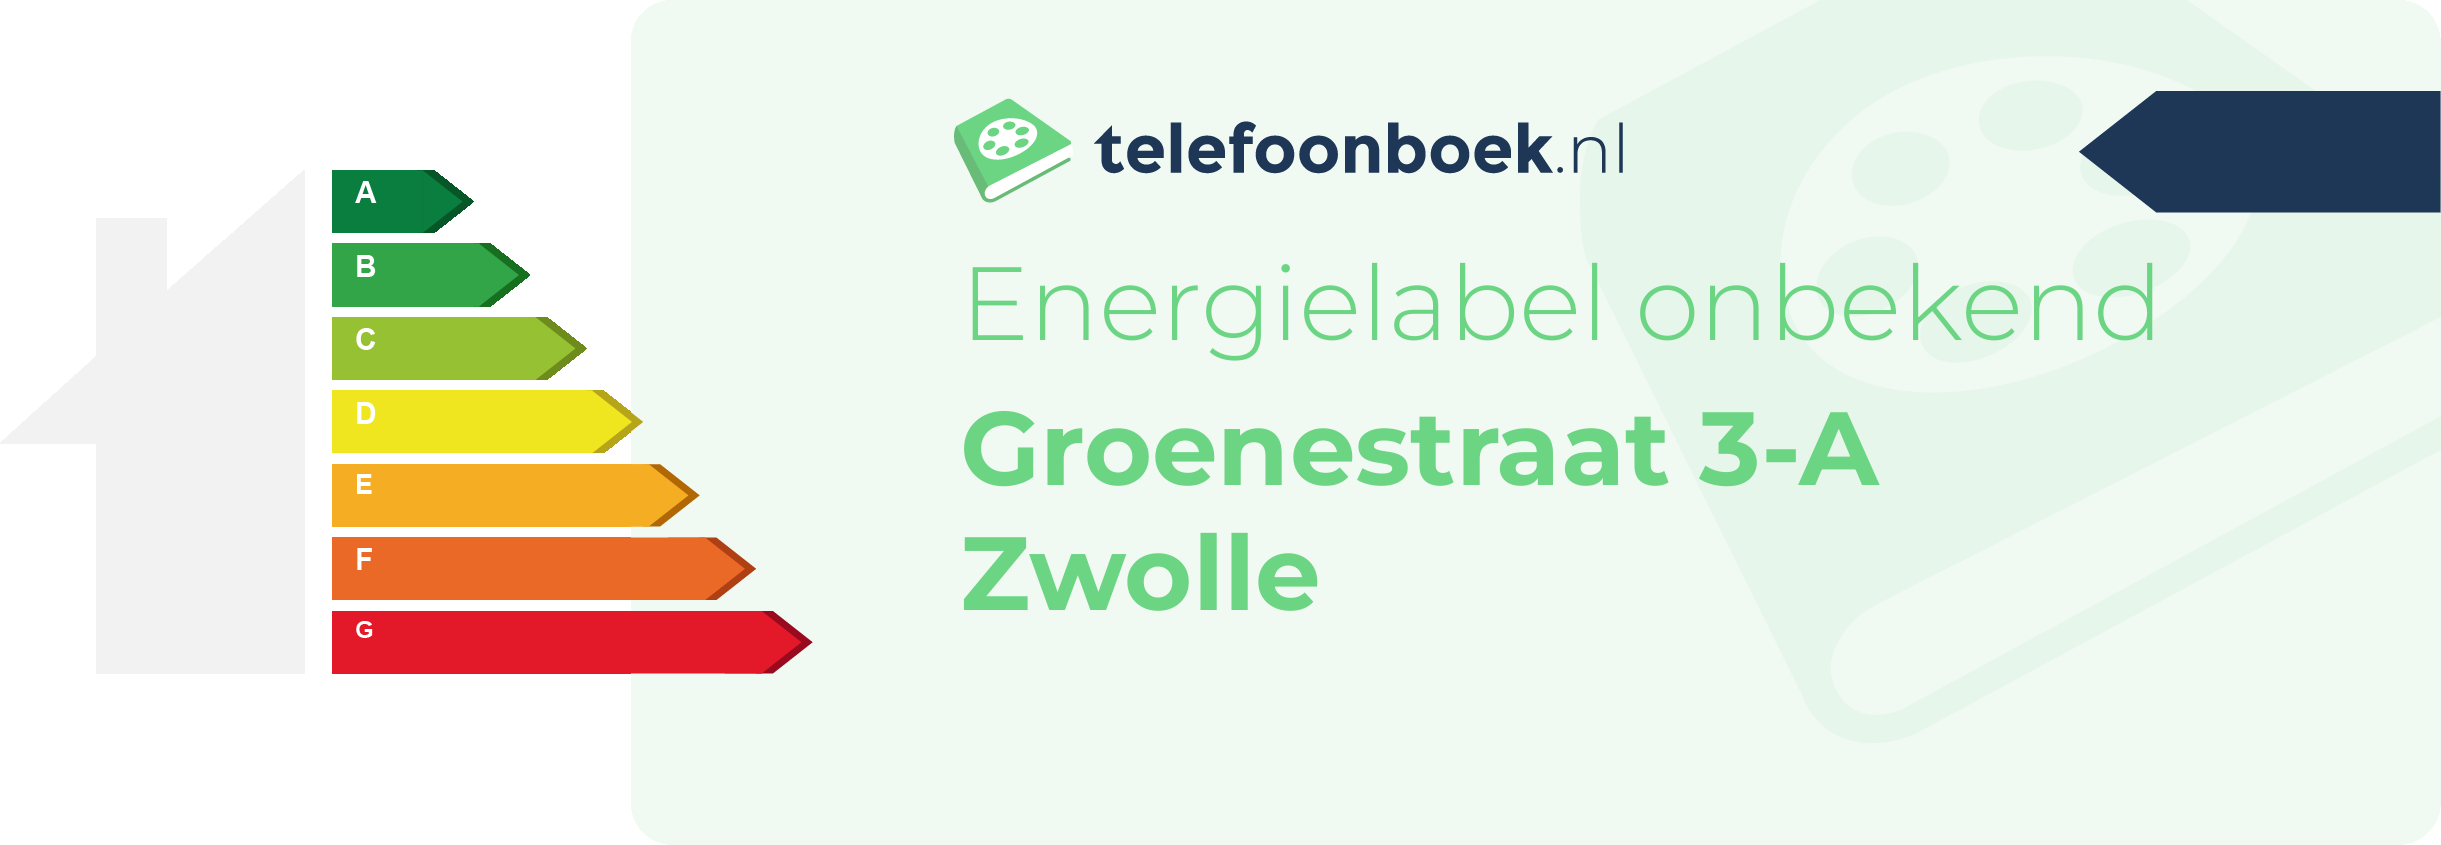 Energielabel Groenestraat 3-A Zwolle